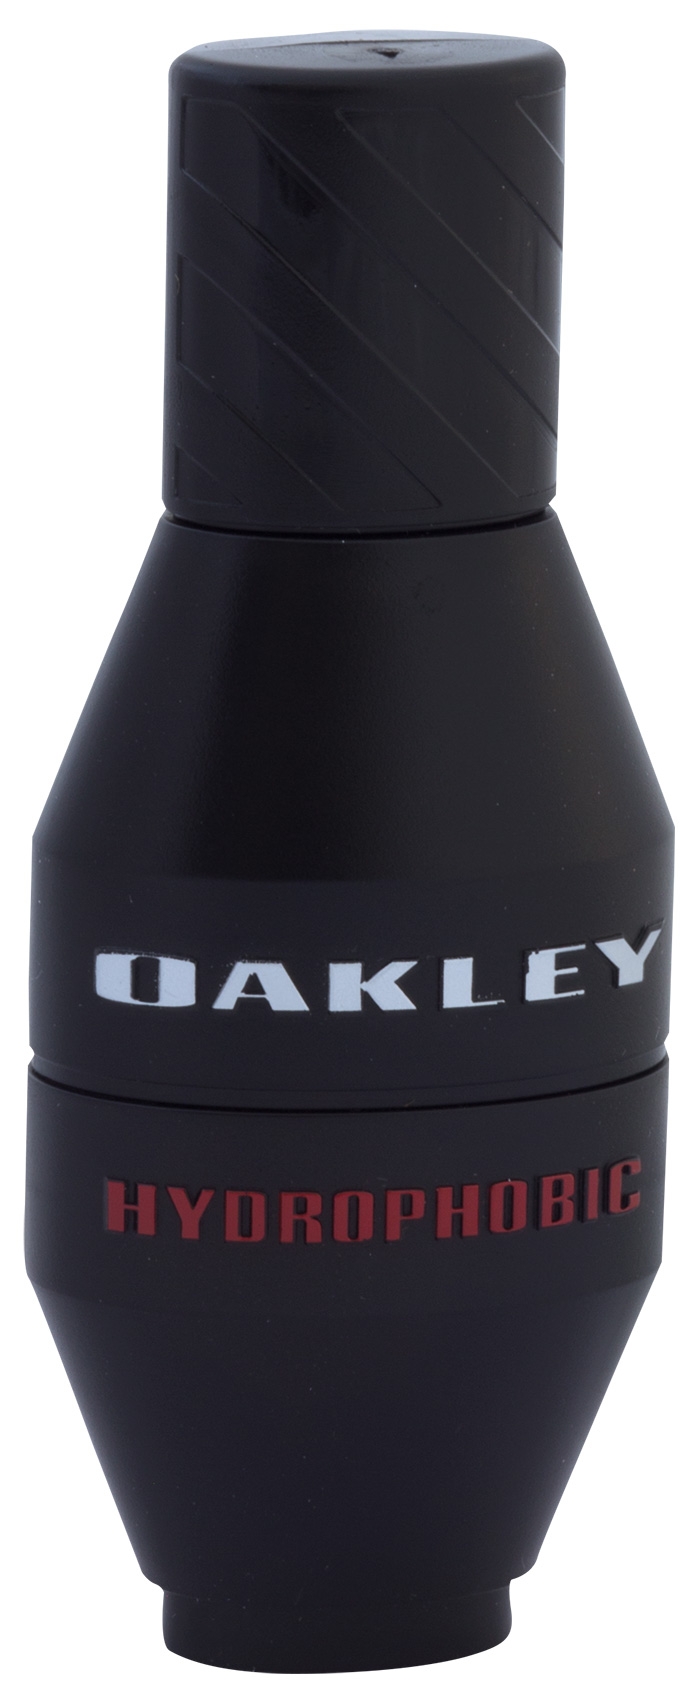 oakley hydrophobic lens cleaner